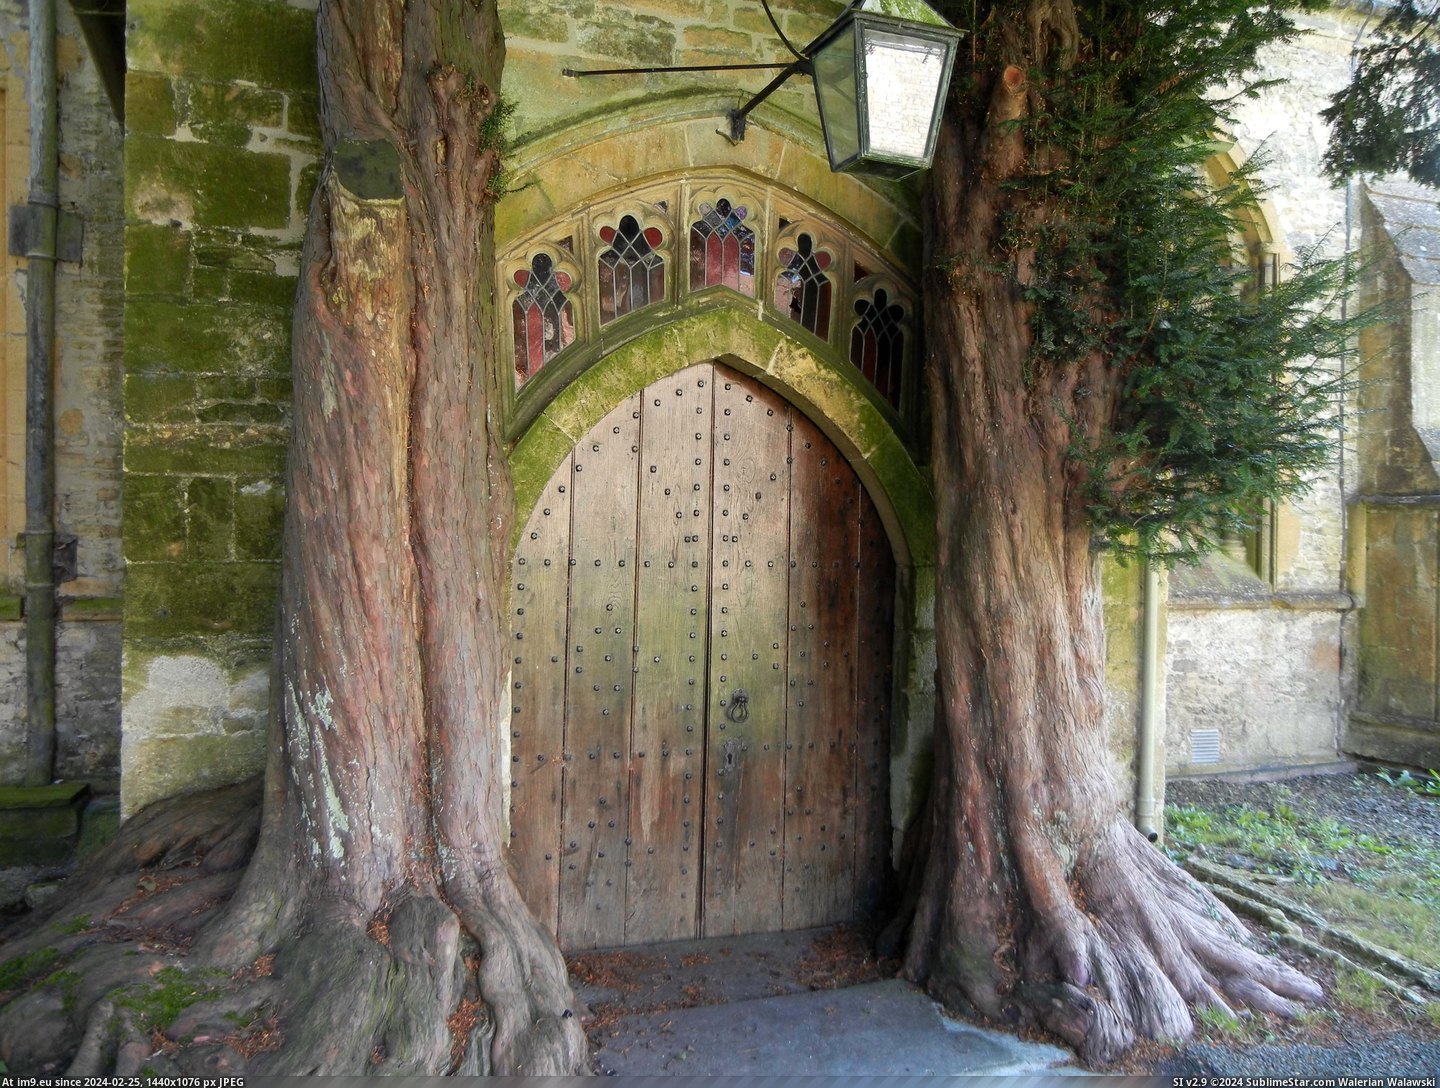 #Door #Church #Entrance #Tolkien #Gloucestershire #Medieval #Inspiration #Believed [Pics] Medieval church door in Gloucestershire believed to be the inspiration for Tolkien's entrance to Moria Pic. (Bild von album My r/PICS favs))